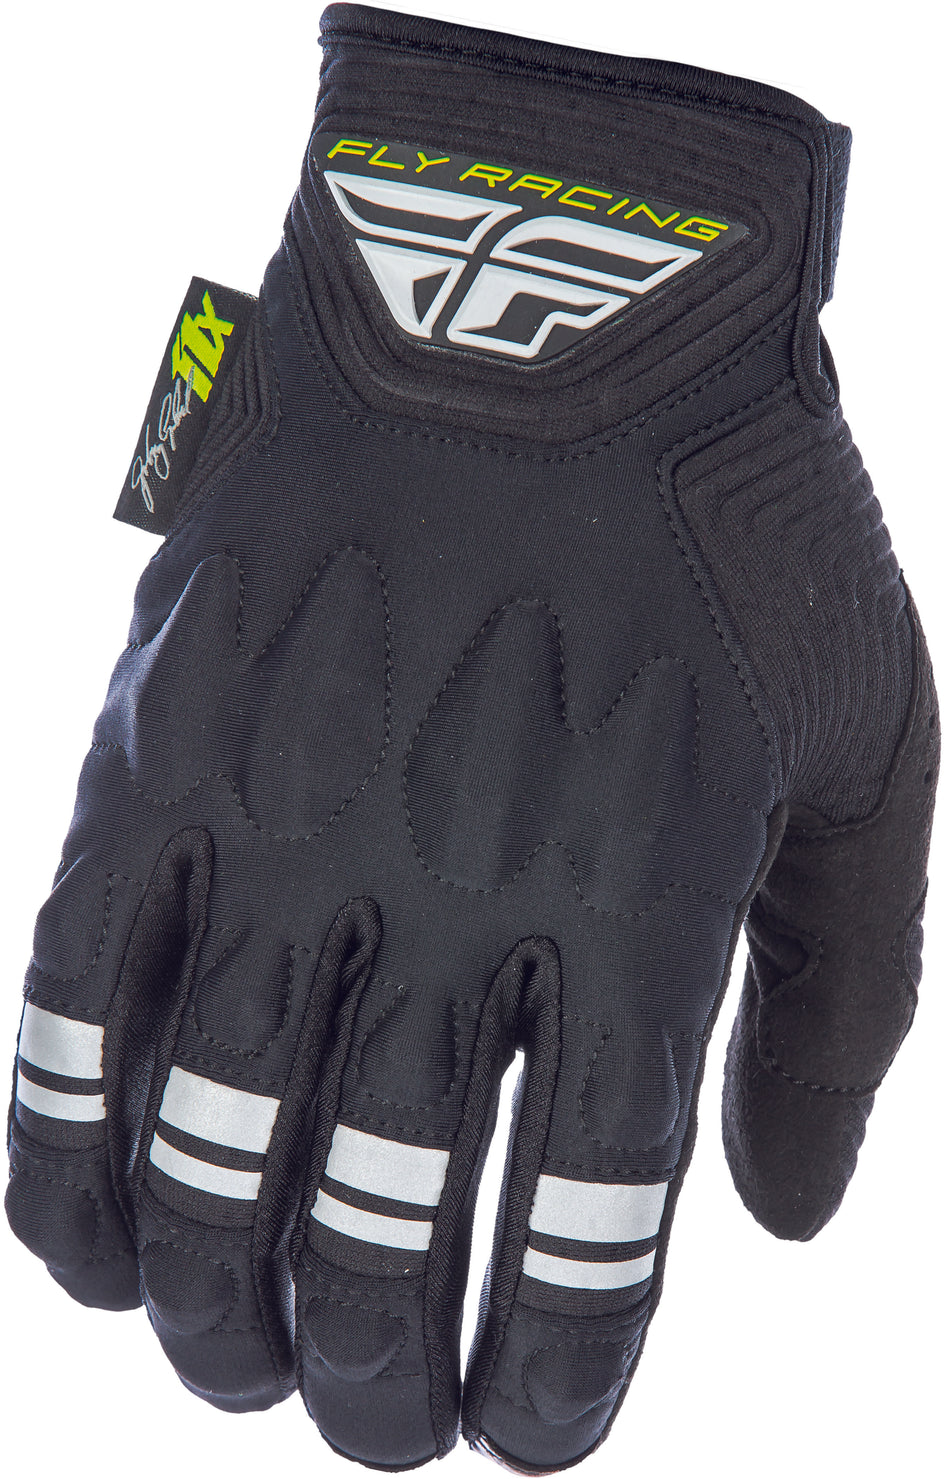 FLY RACING Johnny Campbell Sig Patrol Xc Lite Gloves Black/Grey 370-68011